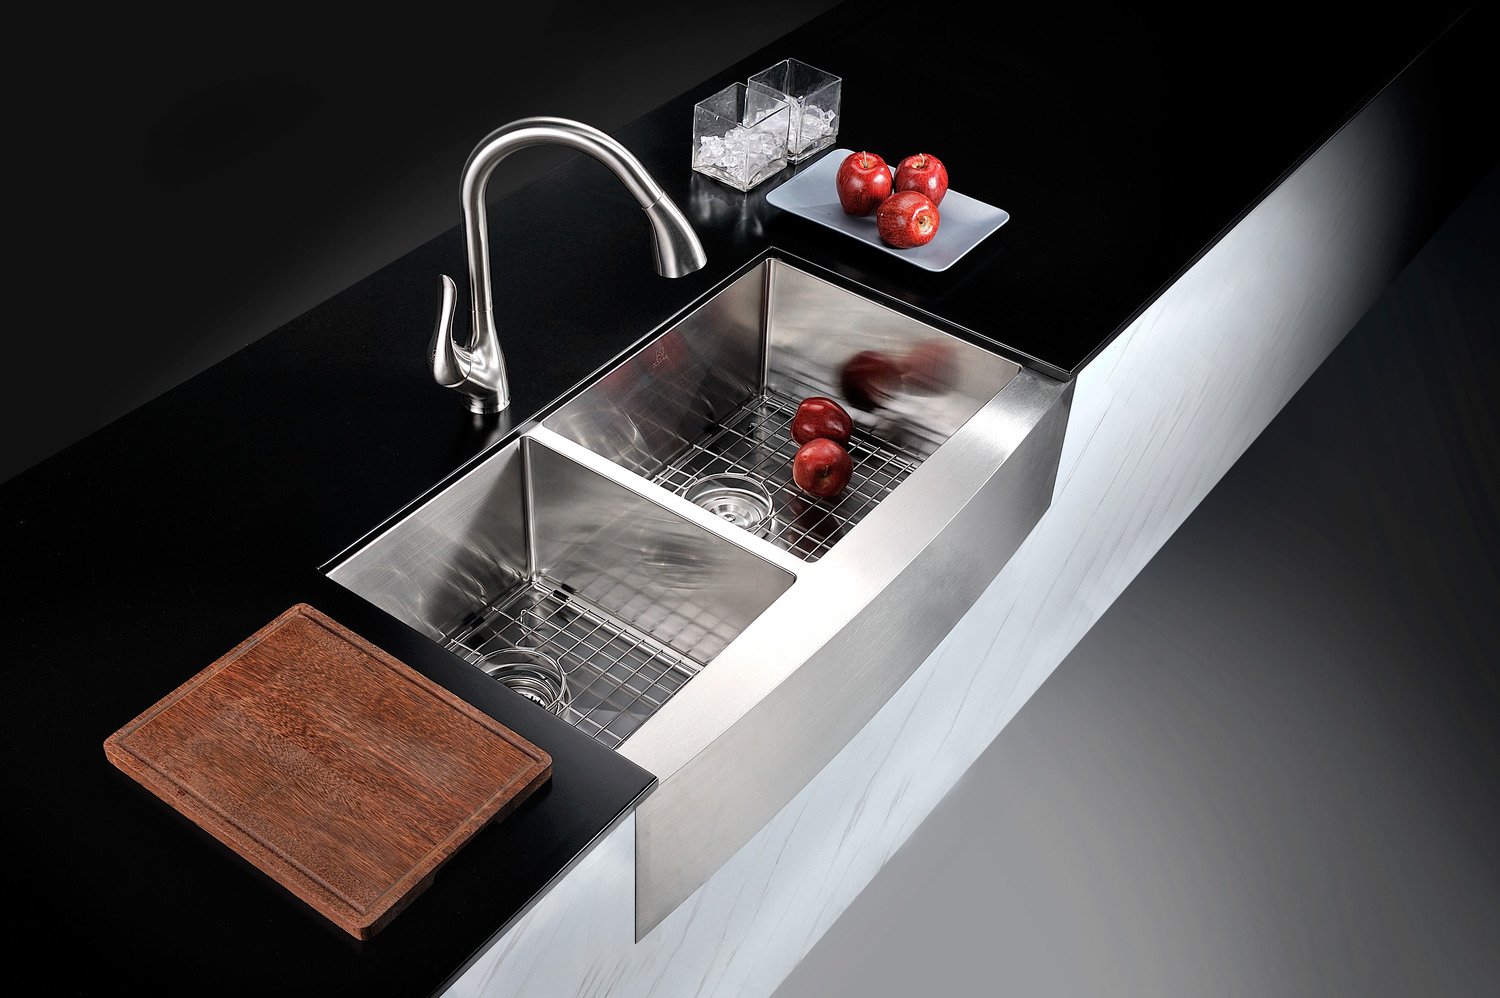 30 inch apron front sink Anzzi KITCHEN - Kitchen Sinks - Farmhouse - Stainless Steel Steel